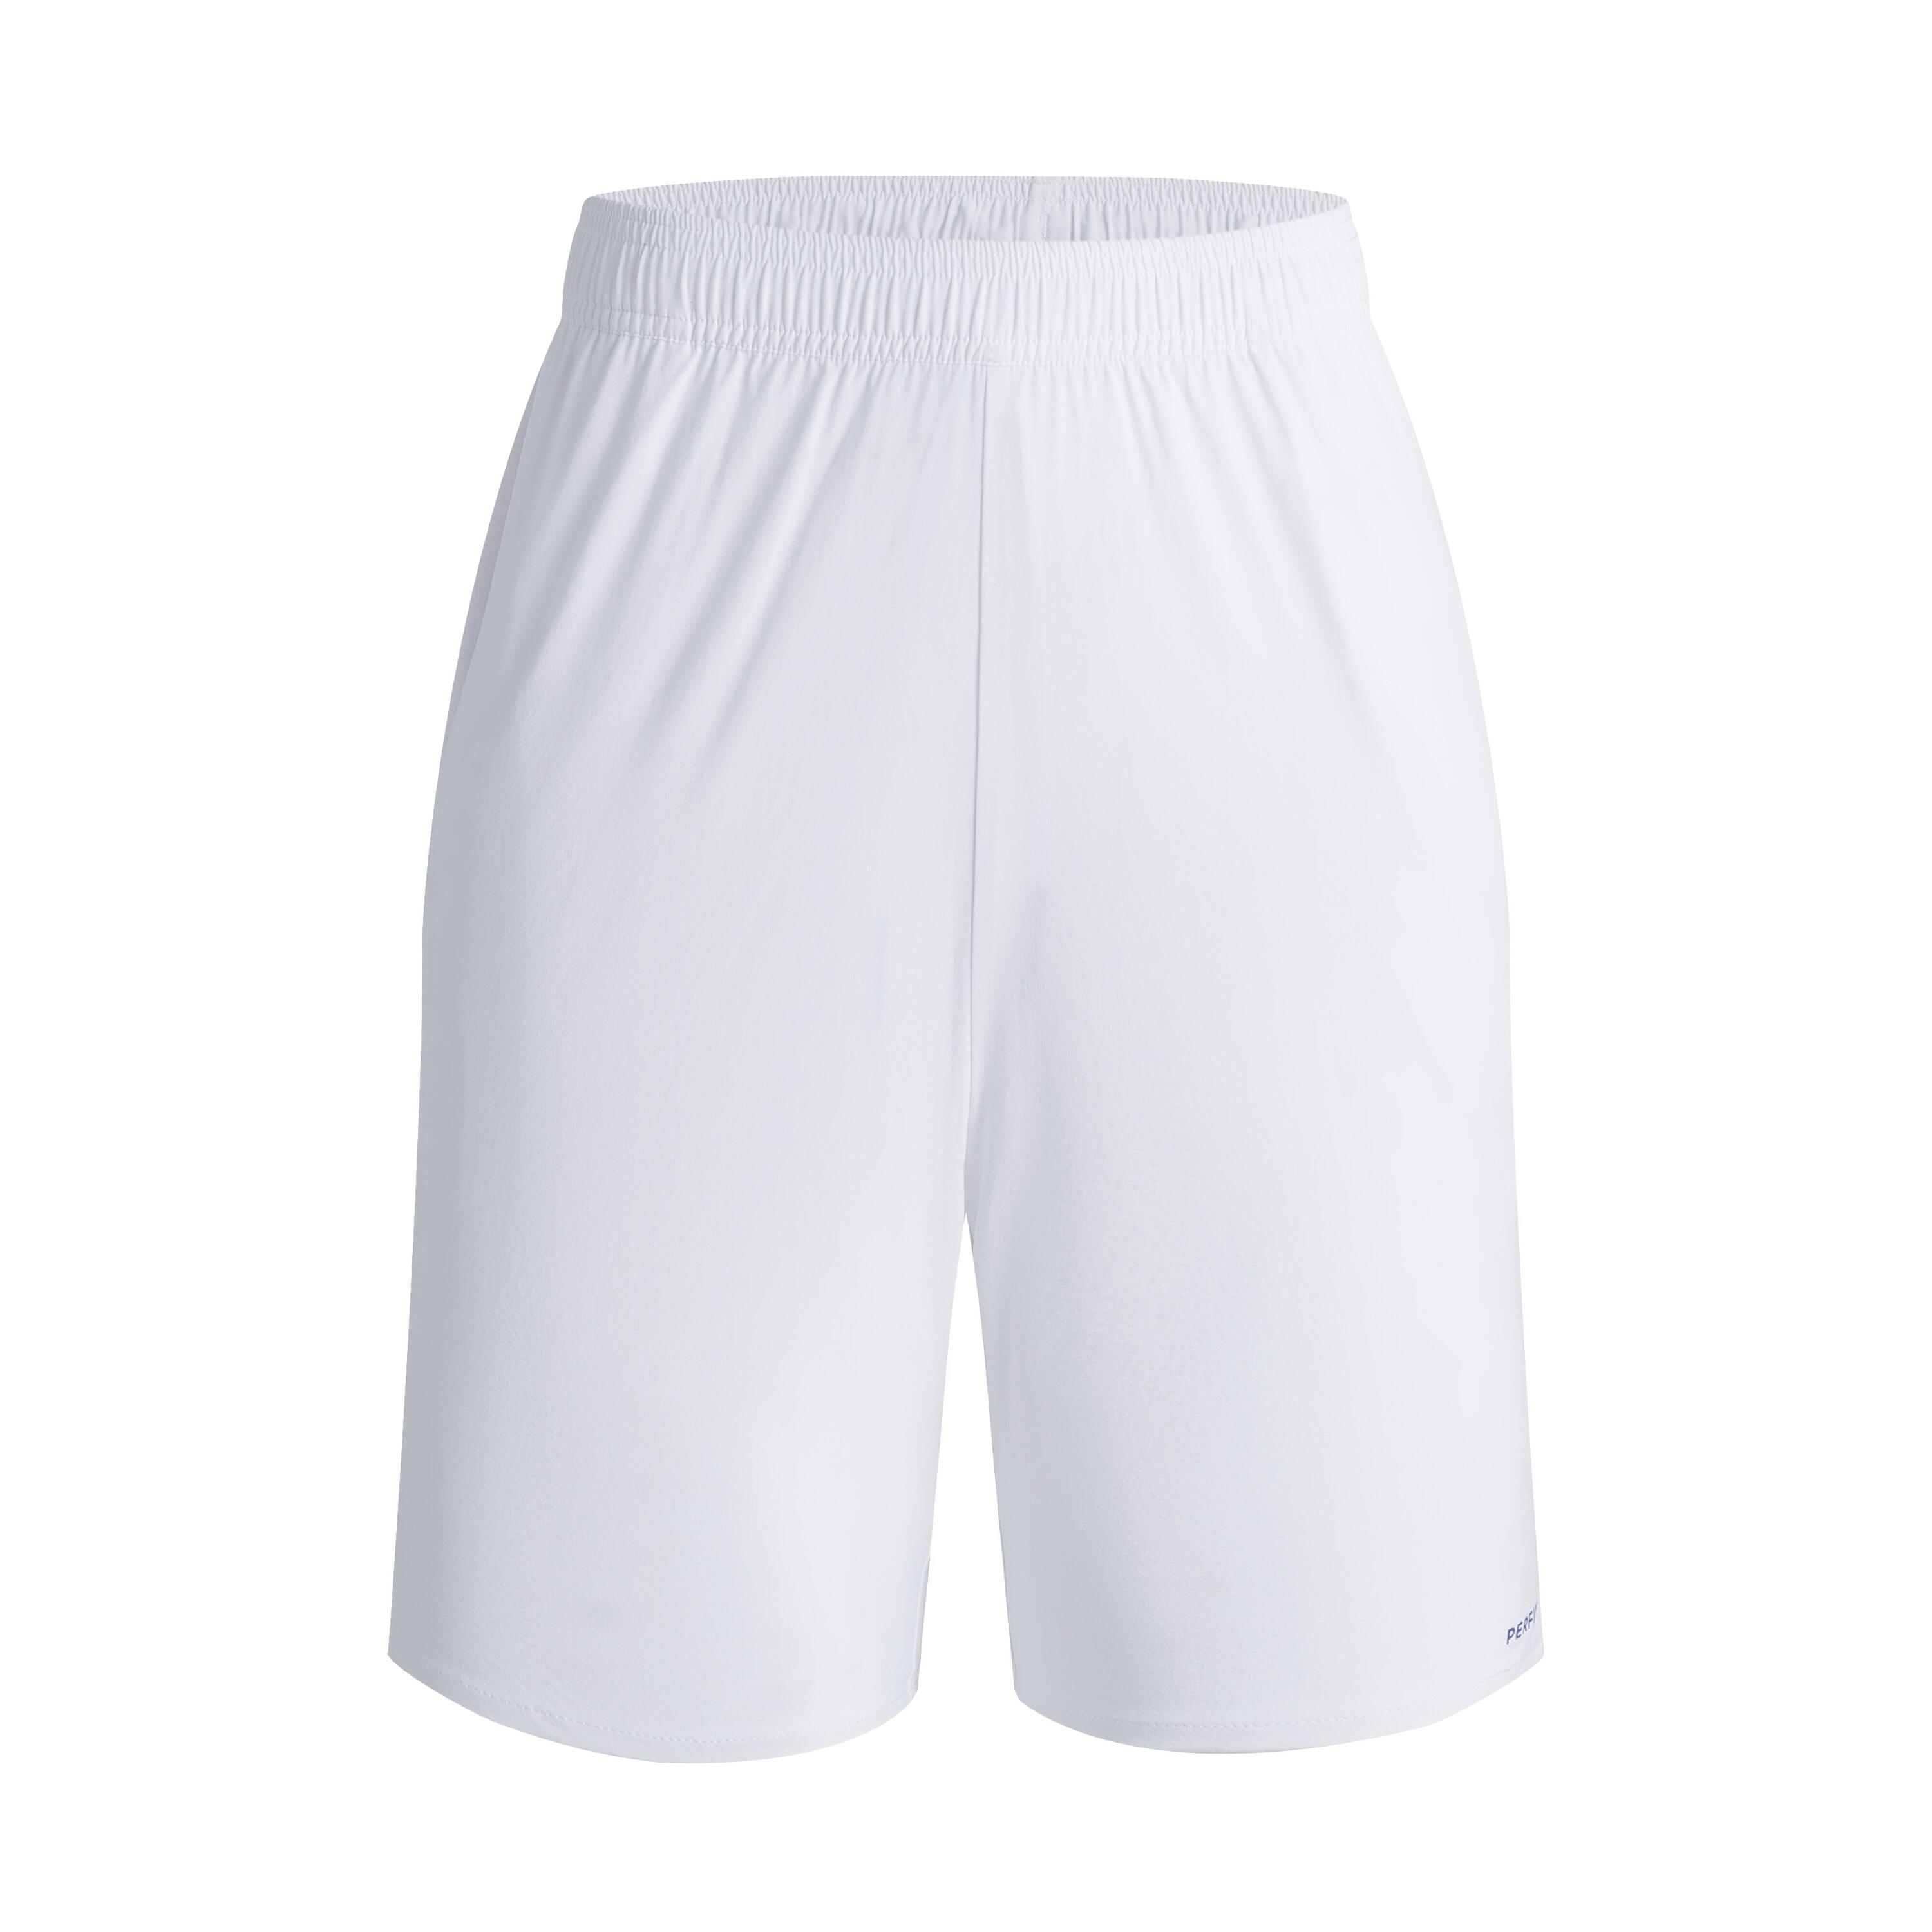 Мужские шорты для бадминтона - 560 белые PERFLY, белый